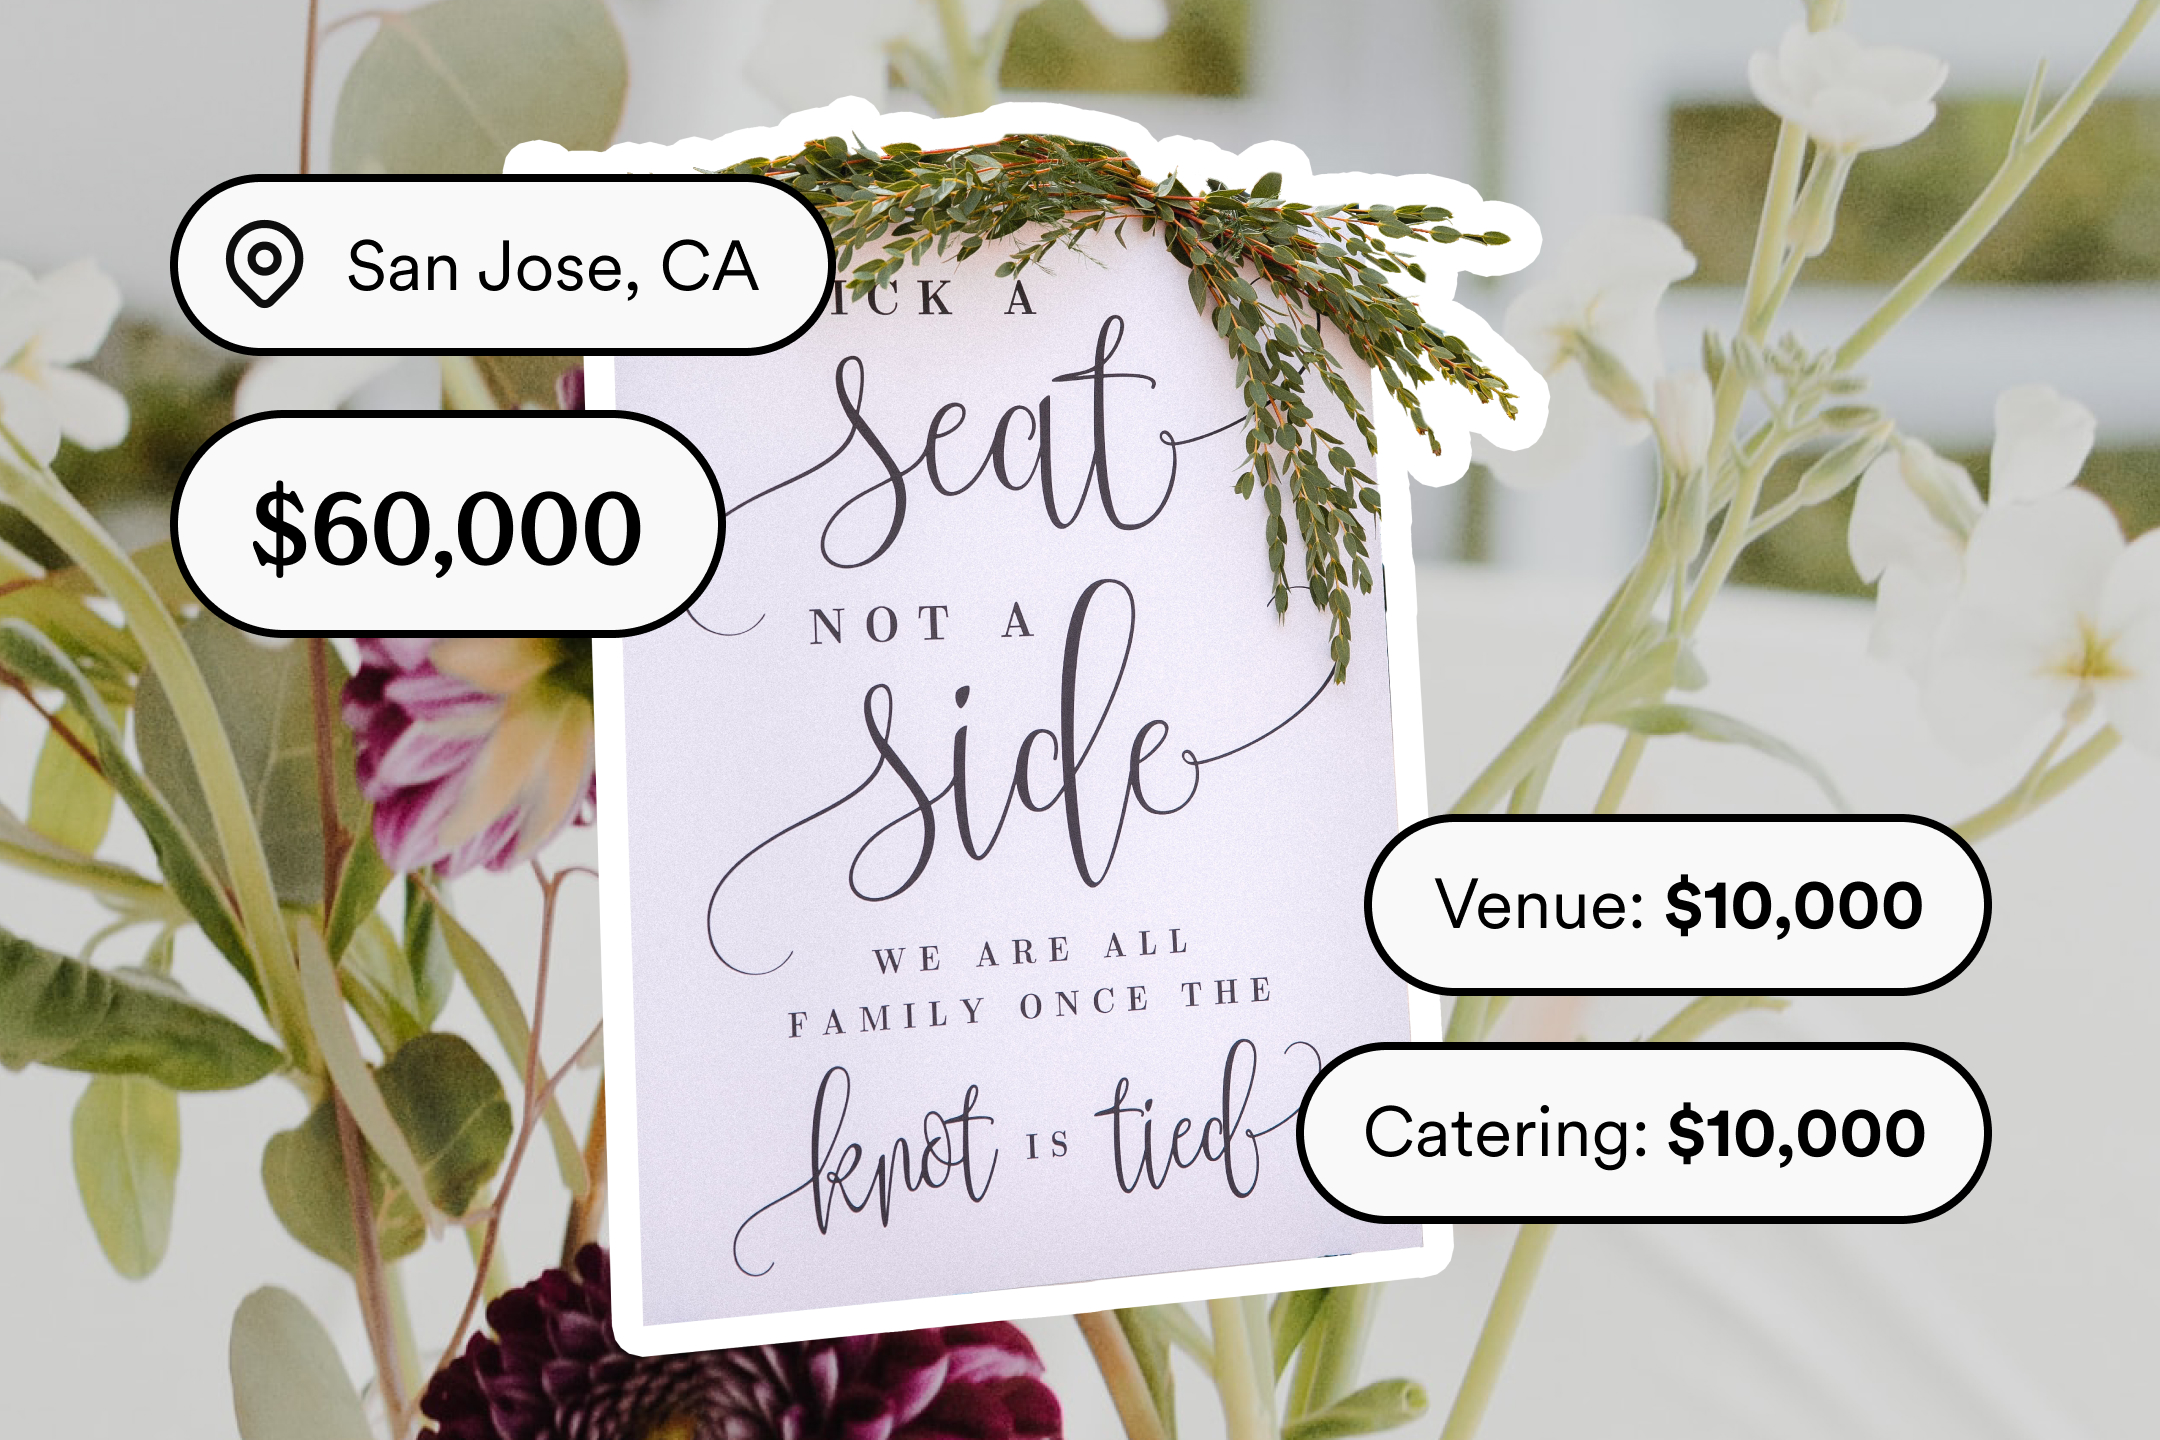 We spent $60K on our San Jose, CA wedding